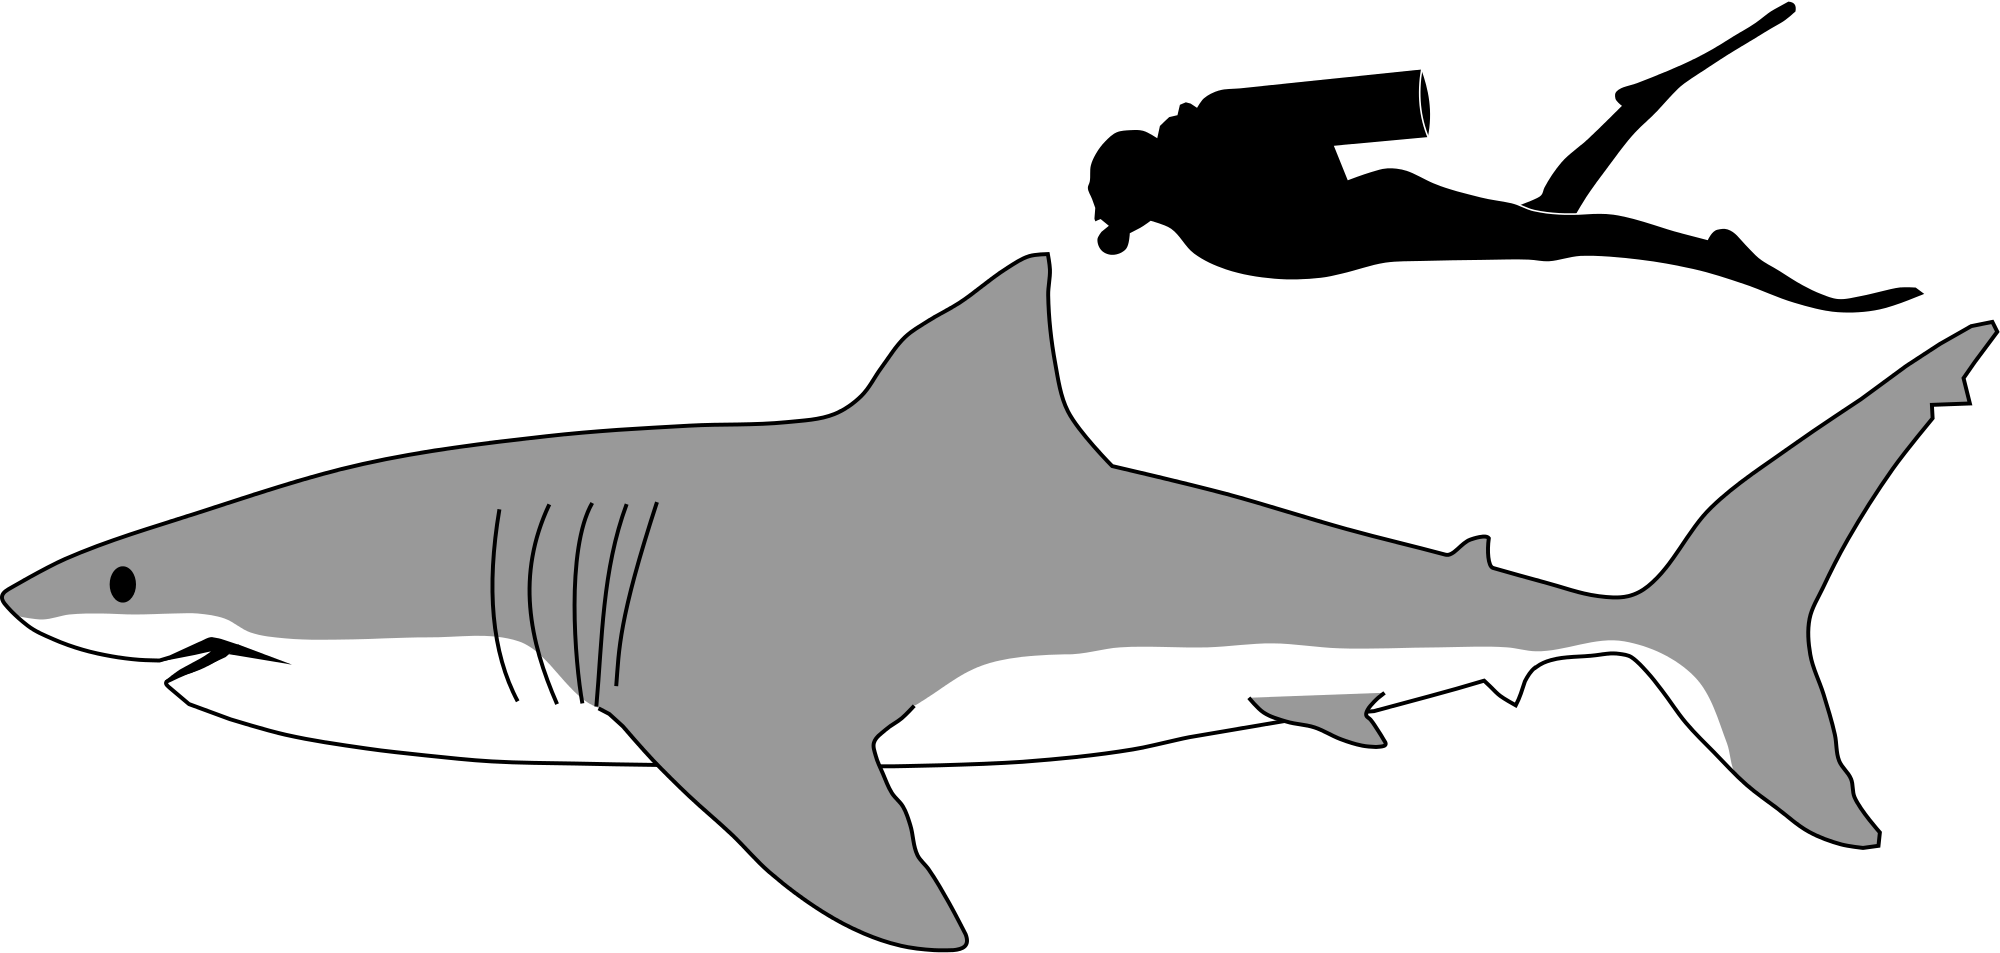 Shark black and white great white shark wikipedia